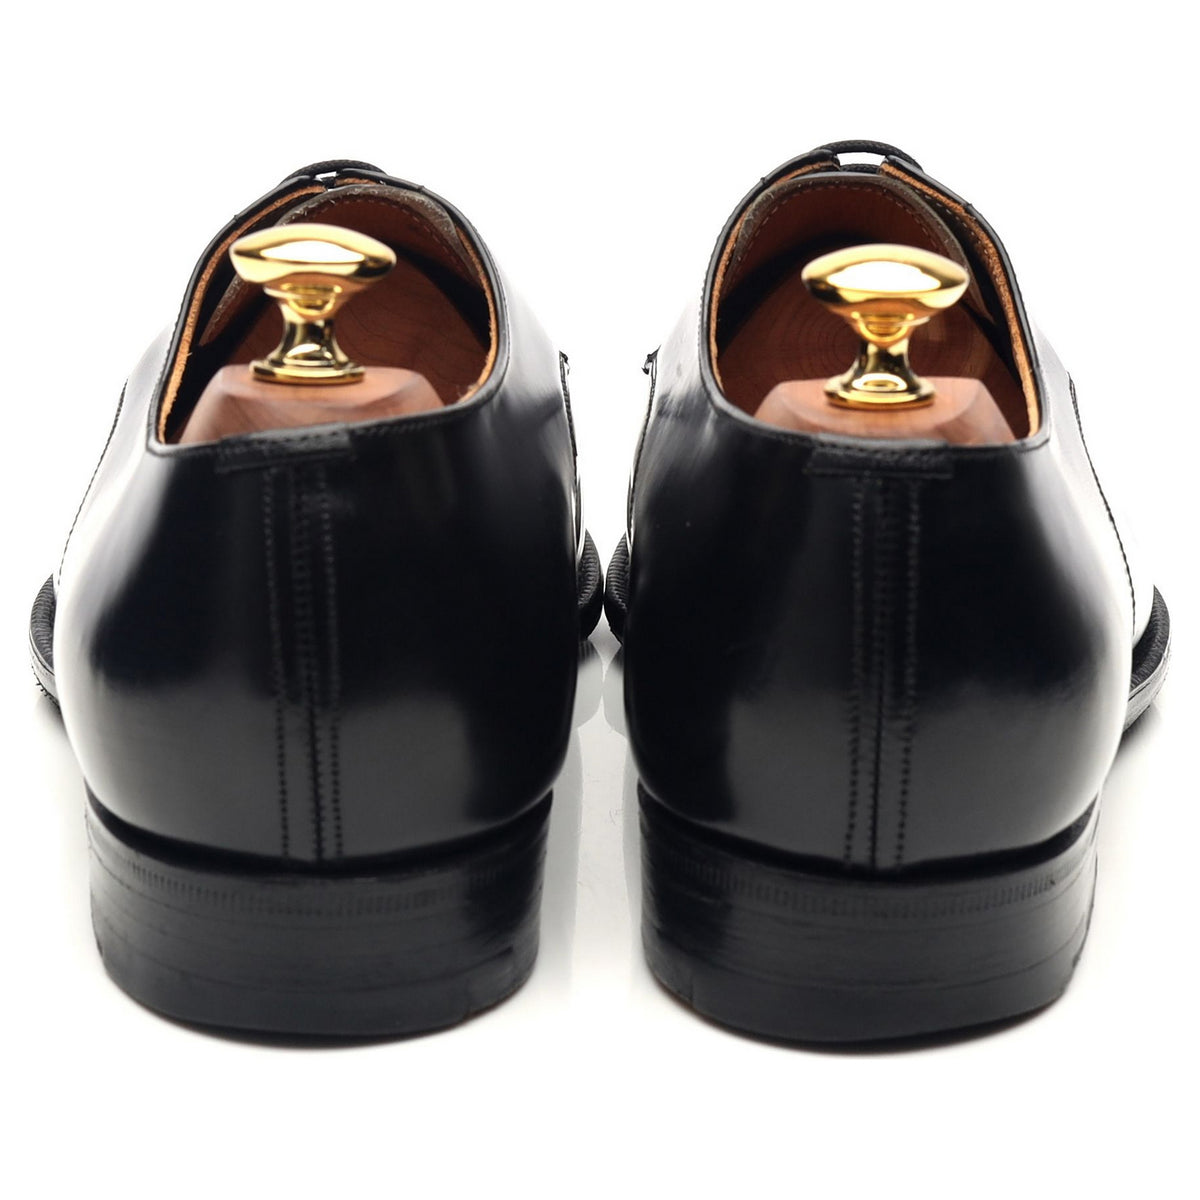 Burford' Black Leather Cap Toe Derby UK 6 G - Abbot's Shoes